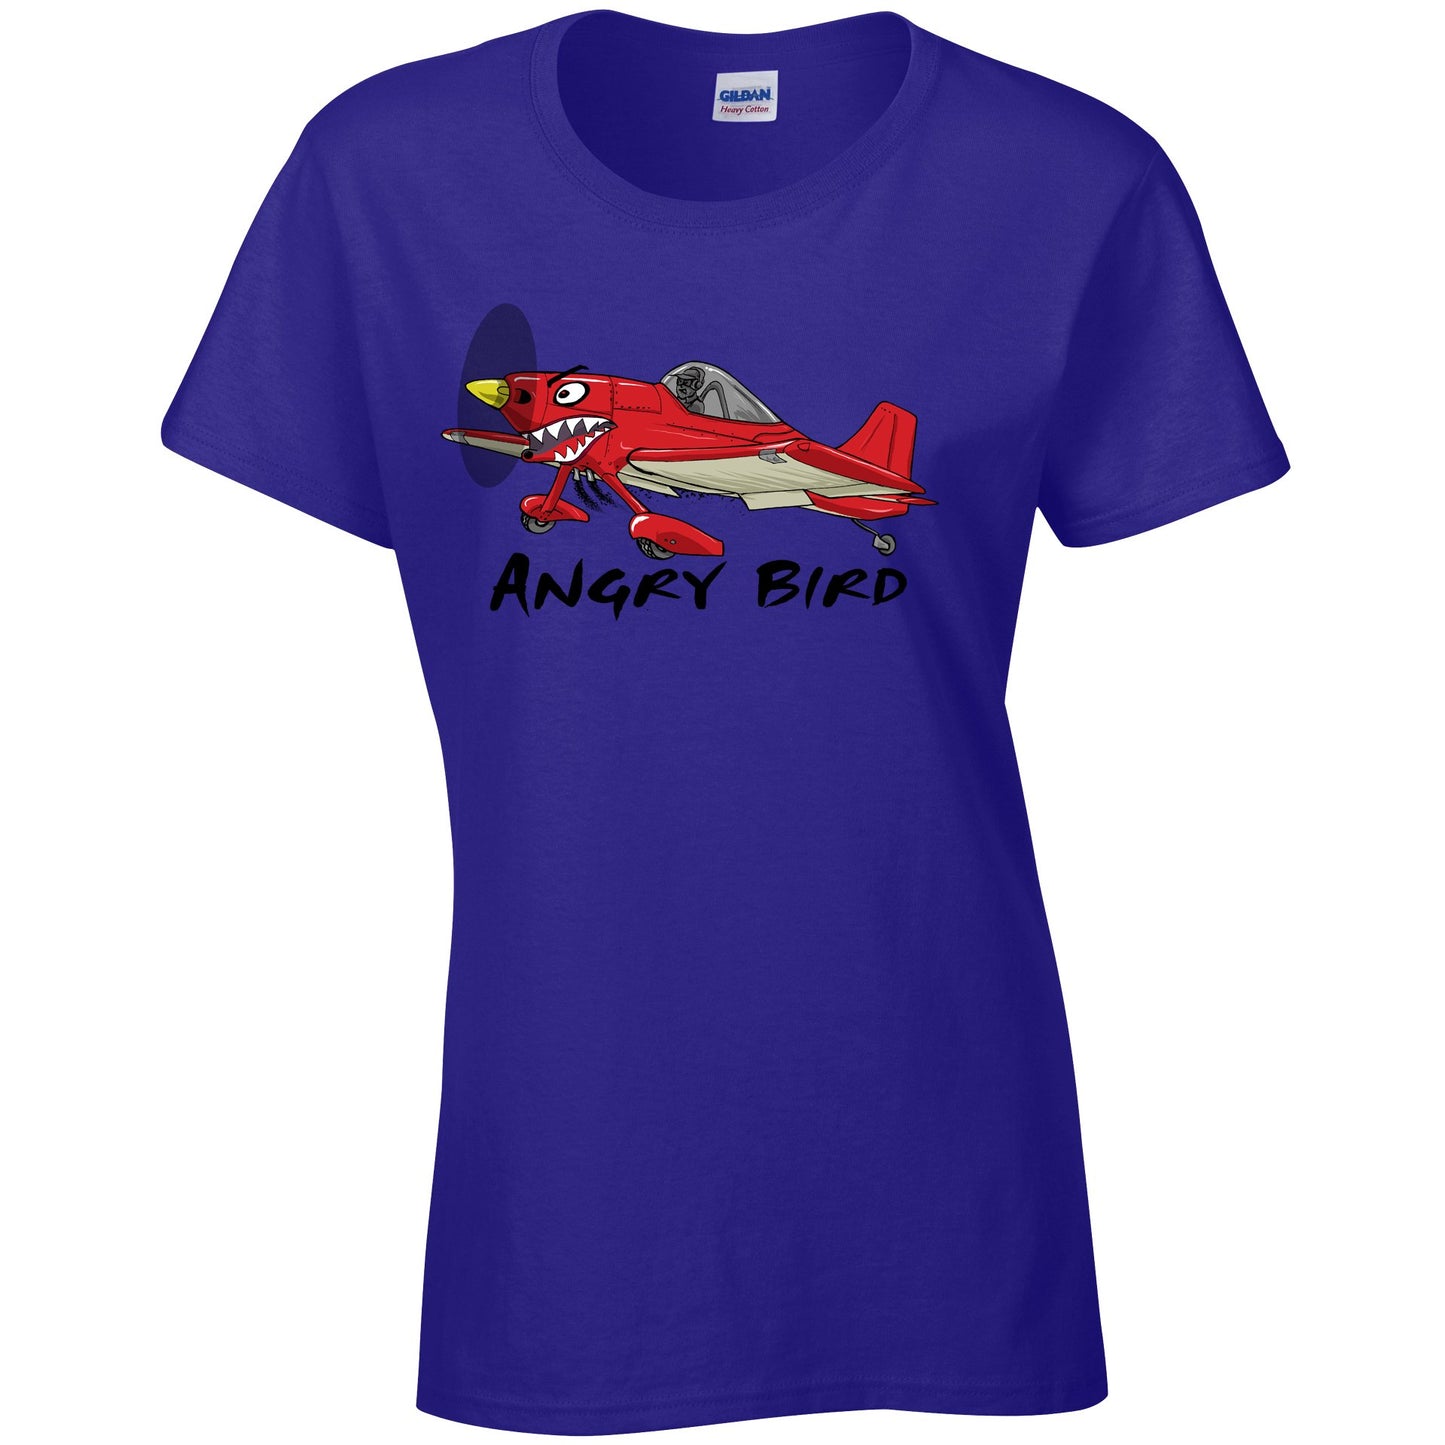 Angry Bird Ladies Aerobatic Flying T-Shirt